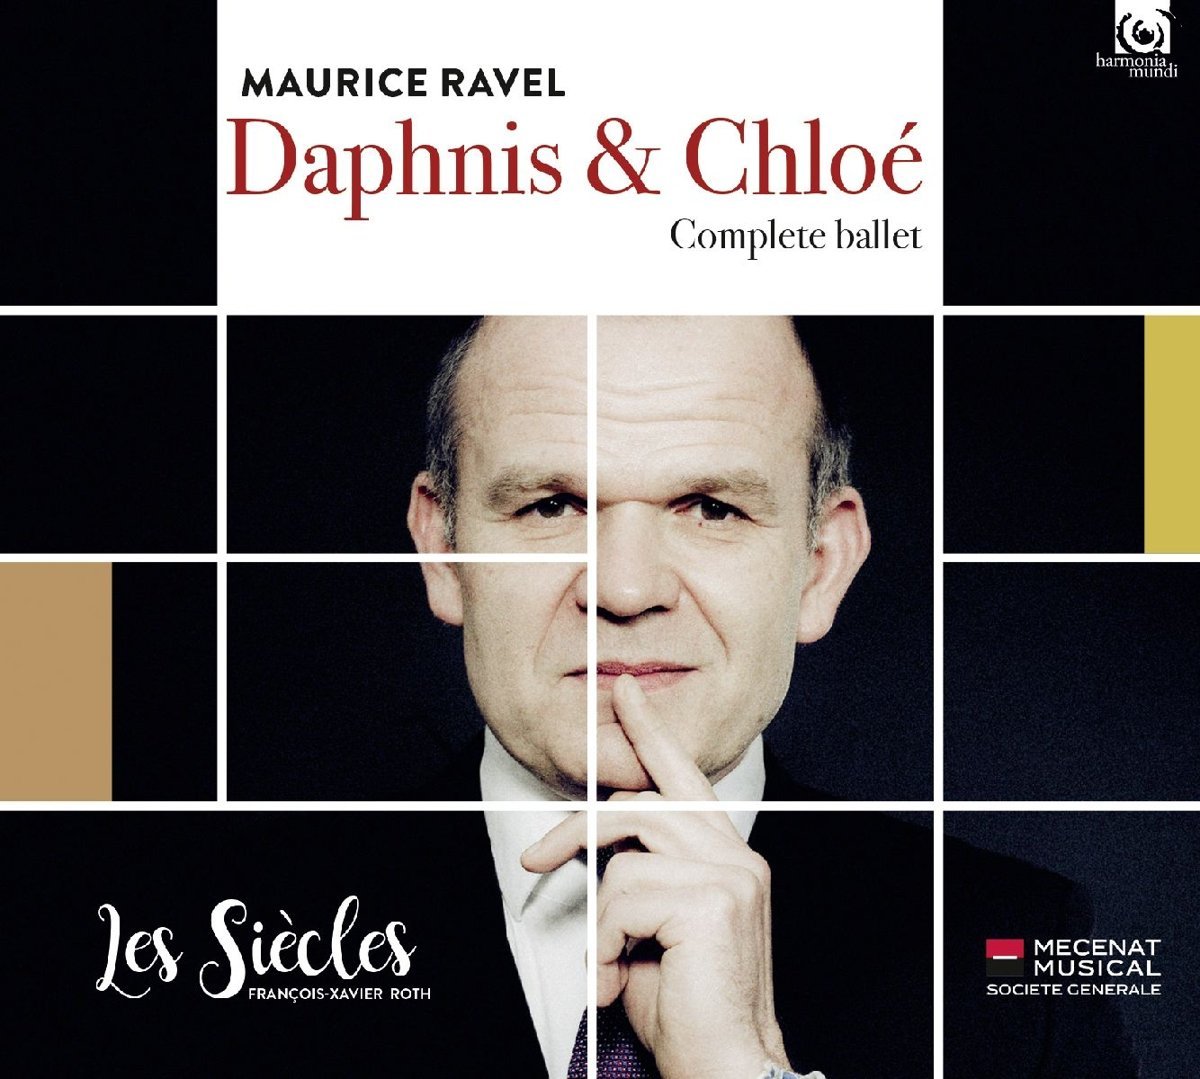 Ravel's Daphnis & Chloe